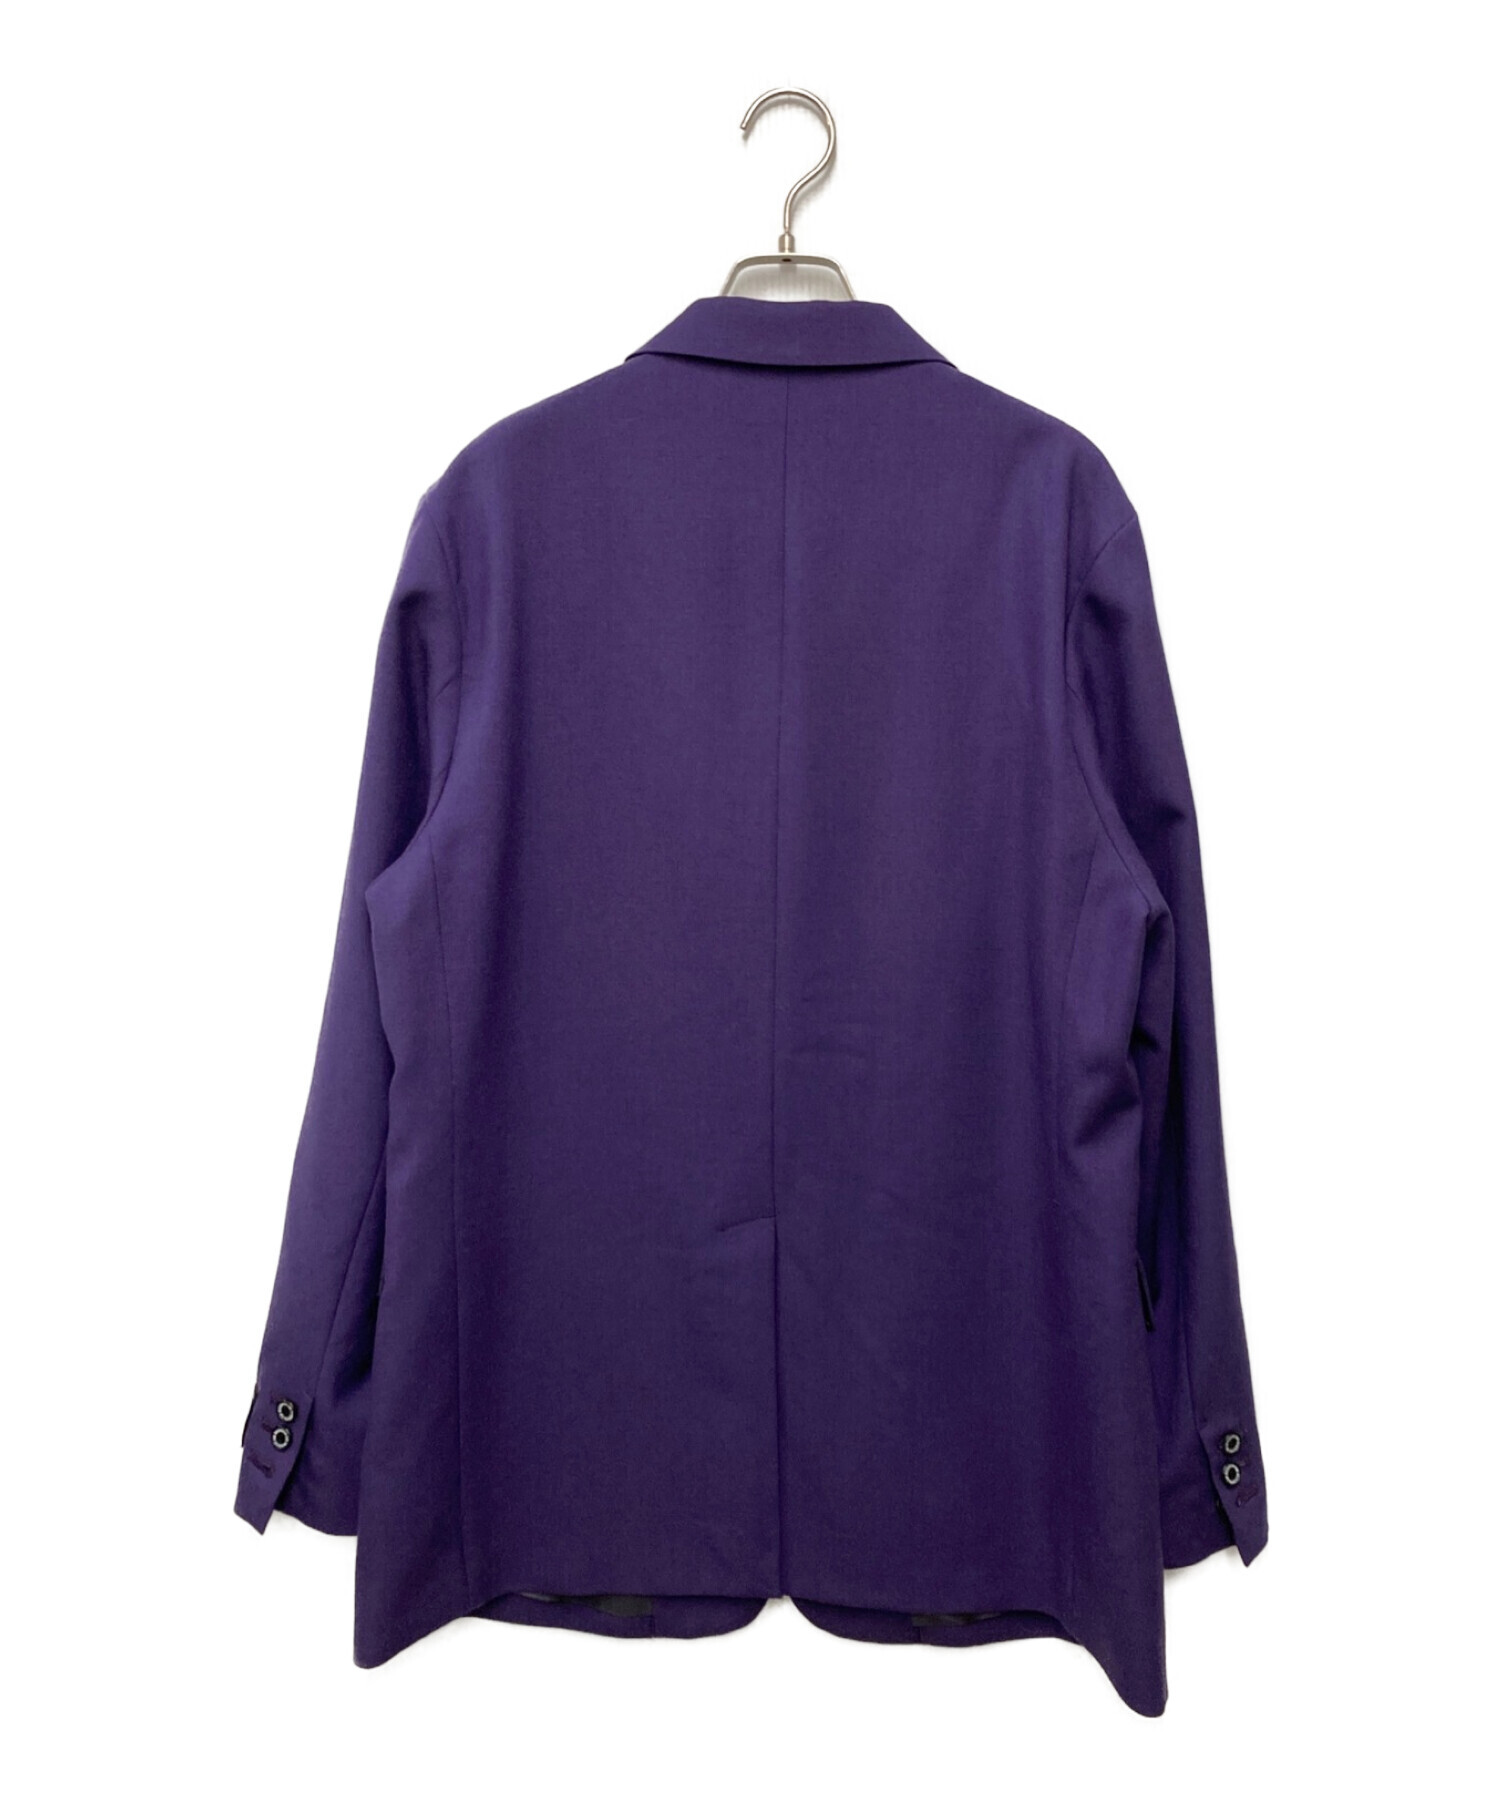 DAIRIKU (ダイリク) Regular Single Tailored Jacket レギュラーシングルテーラードジャケット パープル サイズ:M